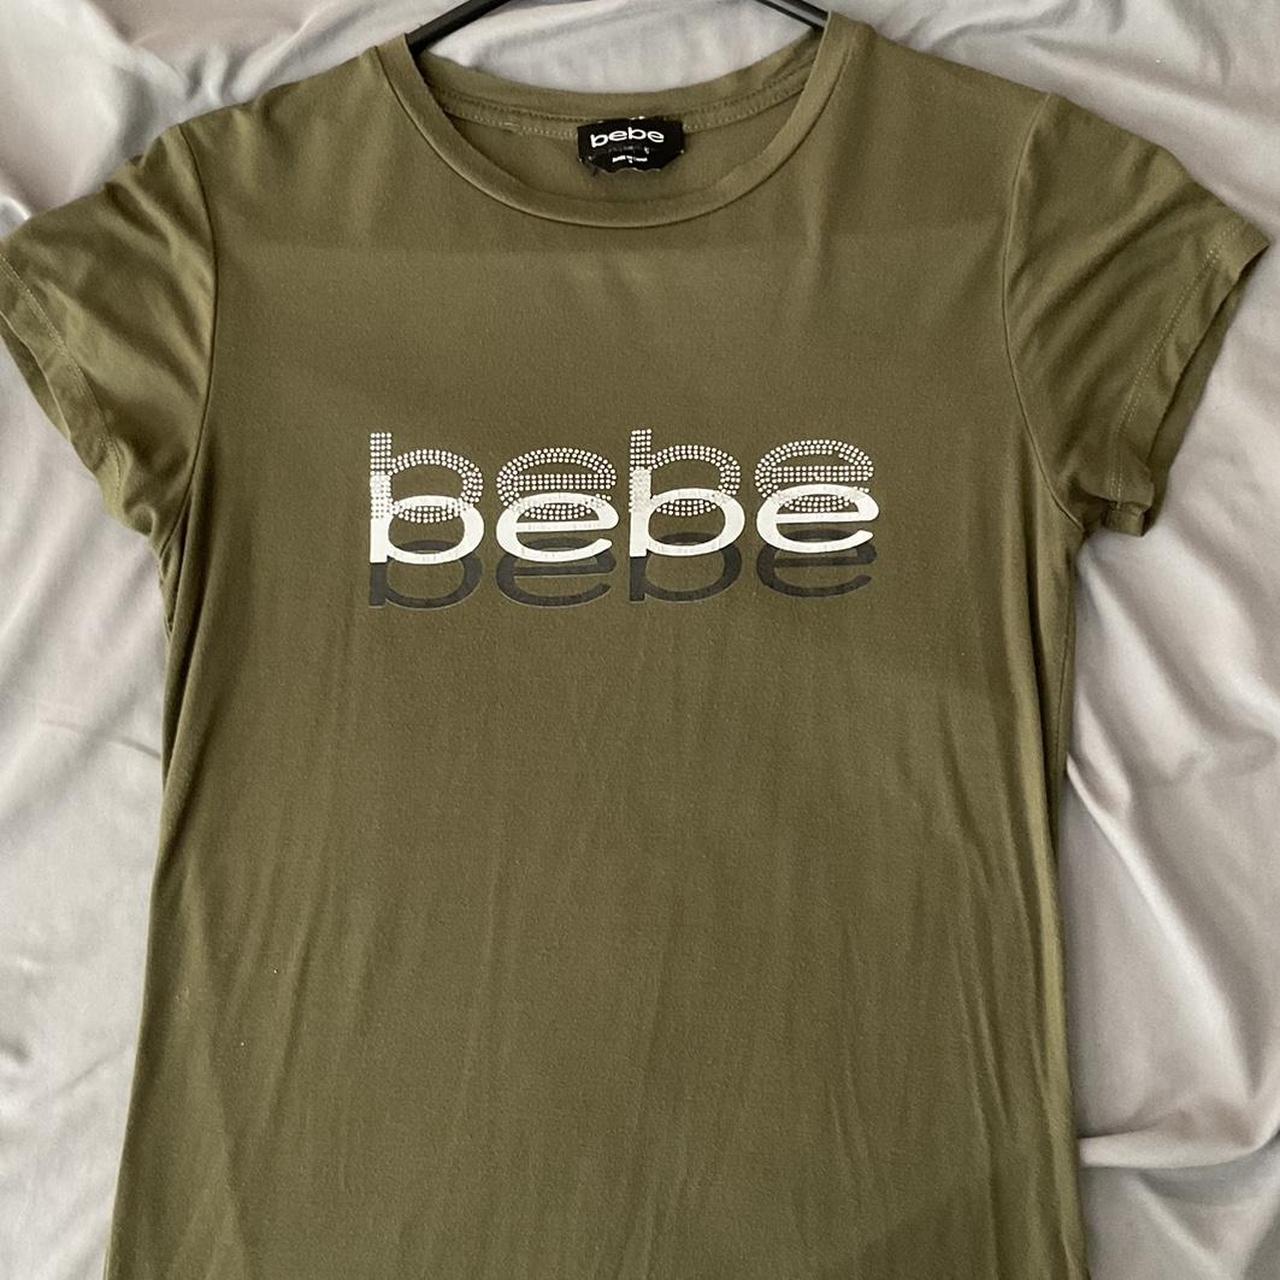 olive green y2k shirt #y2k #2000s #bebe - Depop